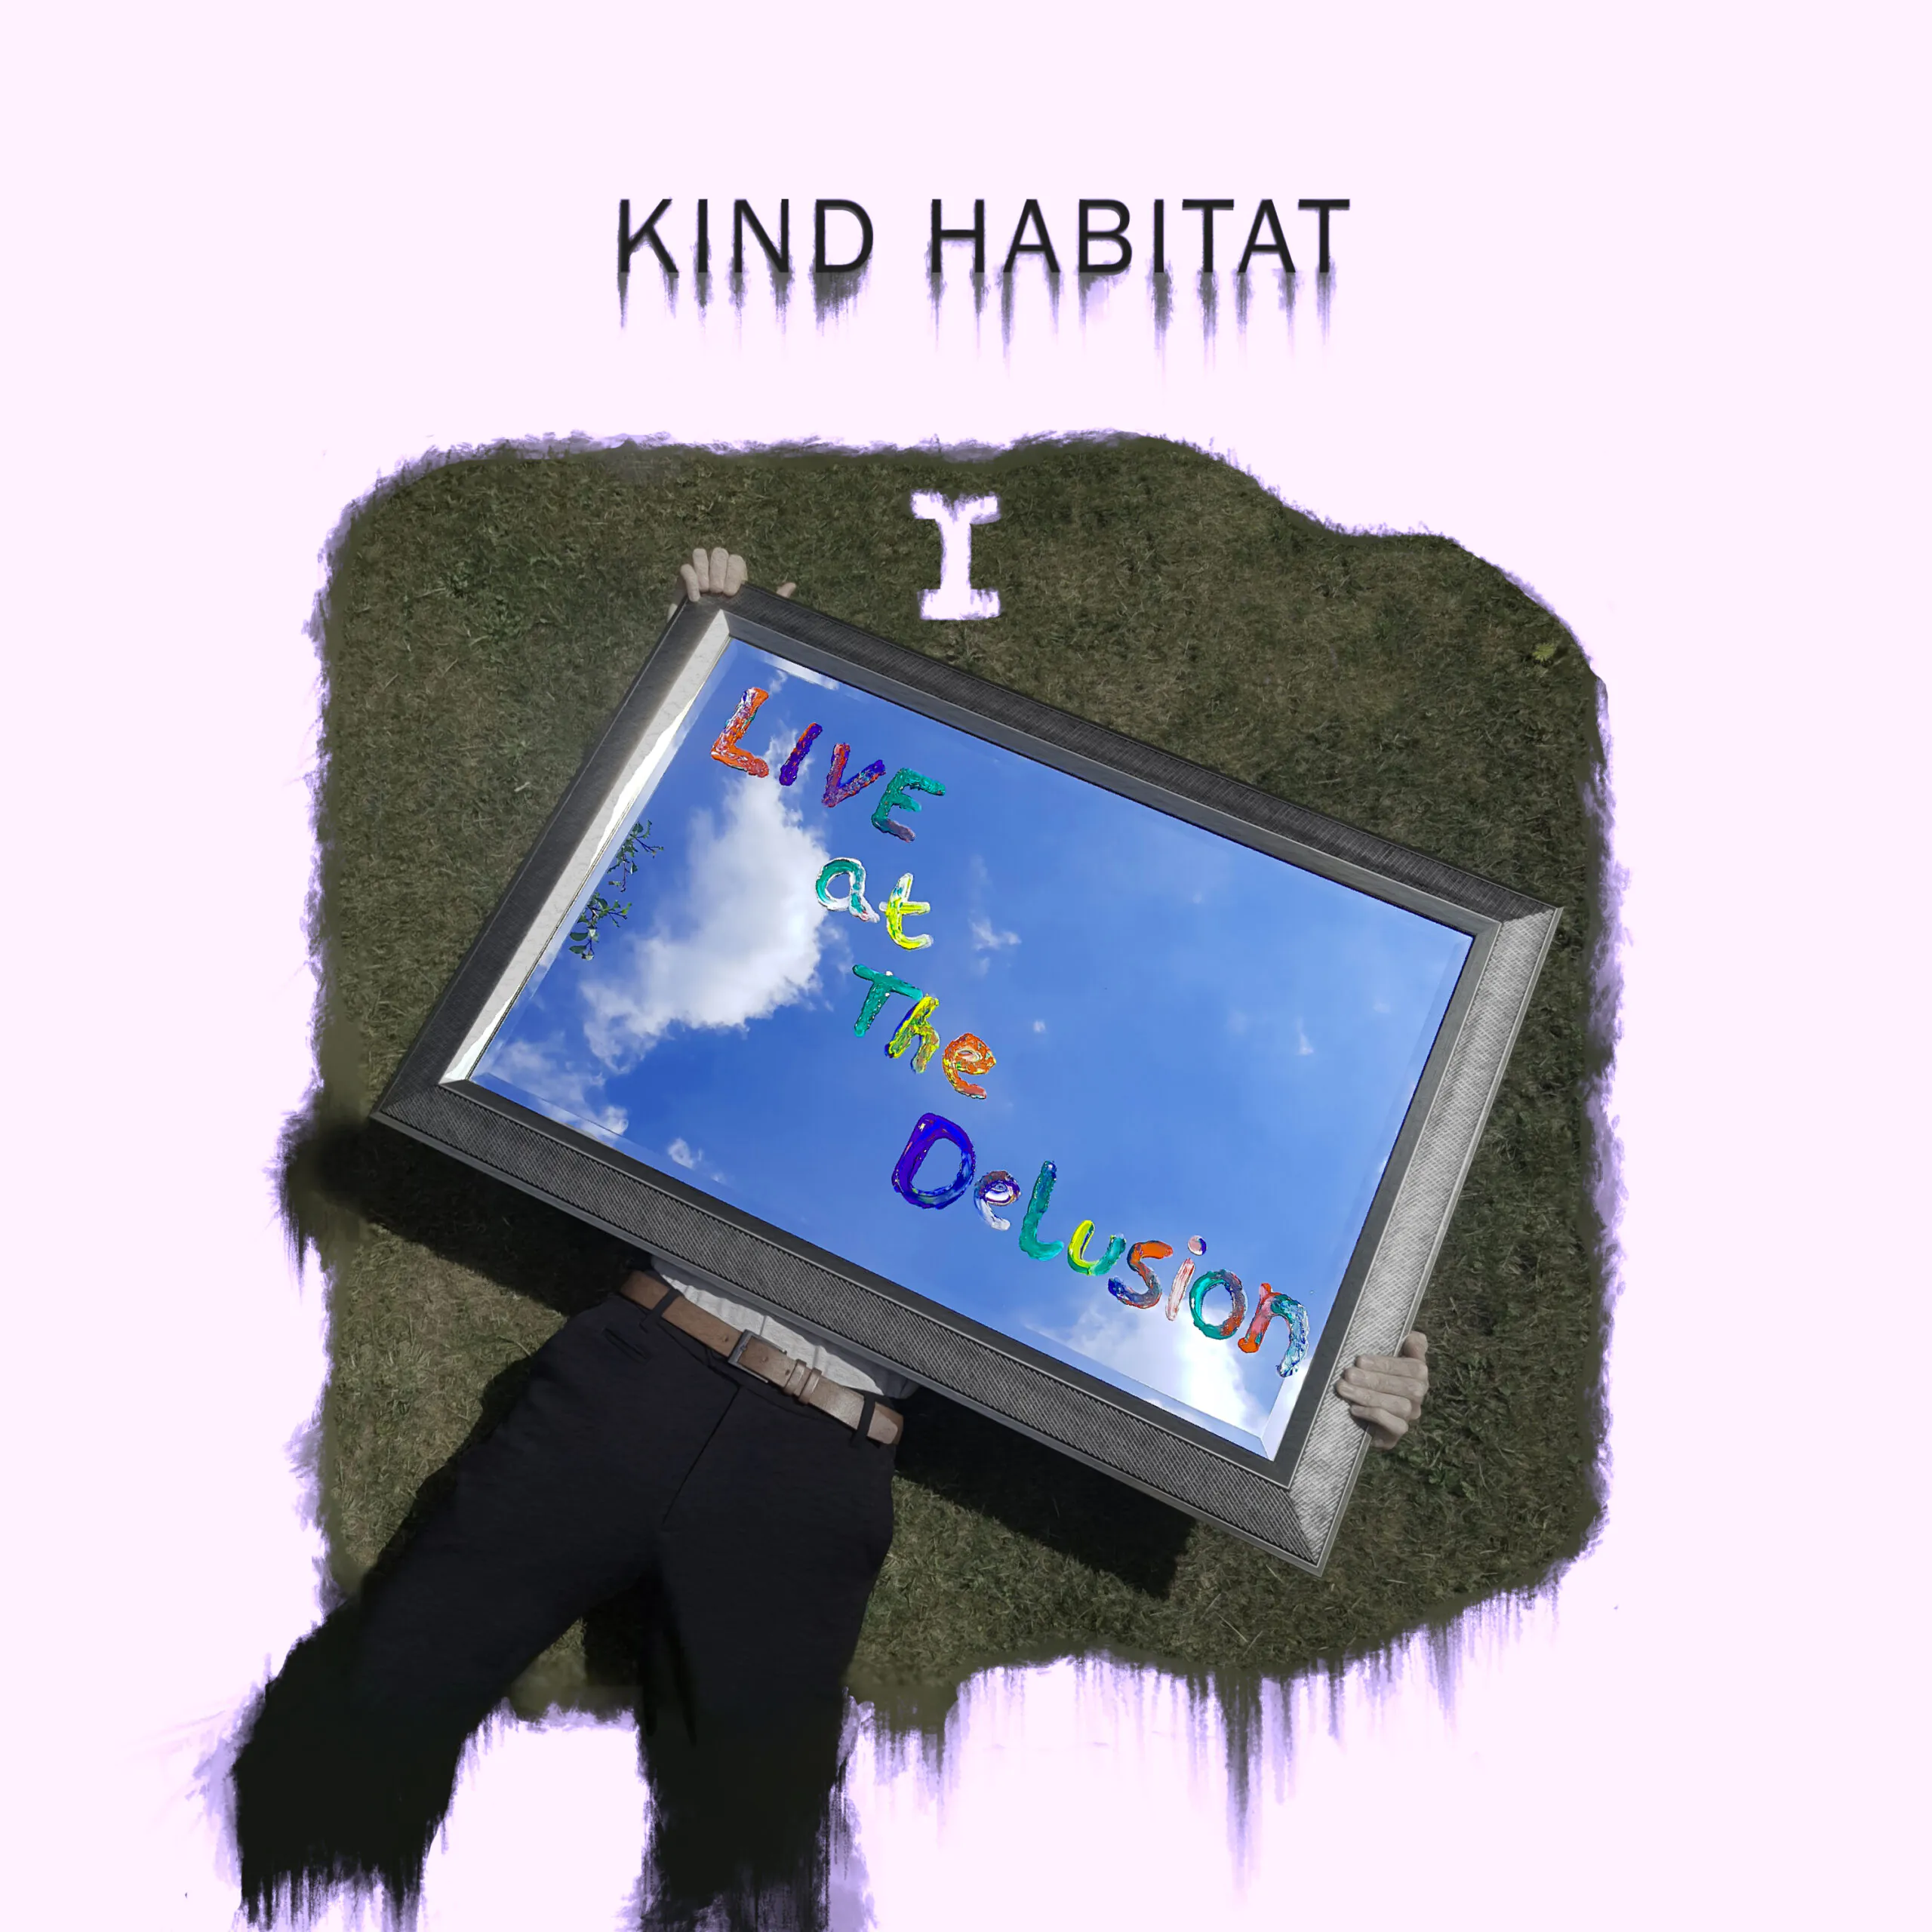 EXCLUSIVE: Kind Habitat let loose alt-rock debut album – Listen Now